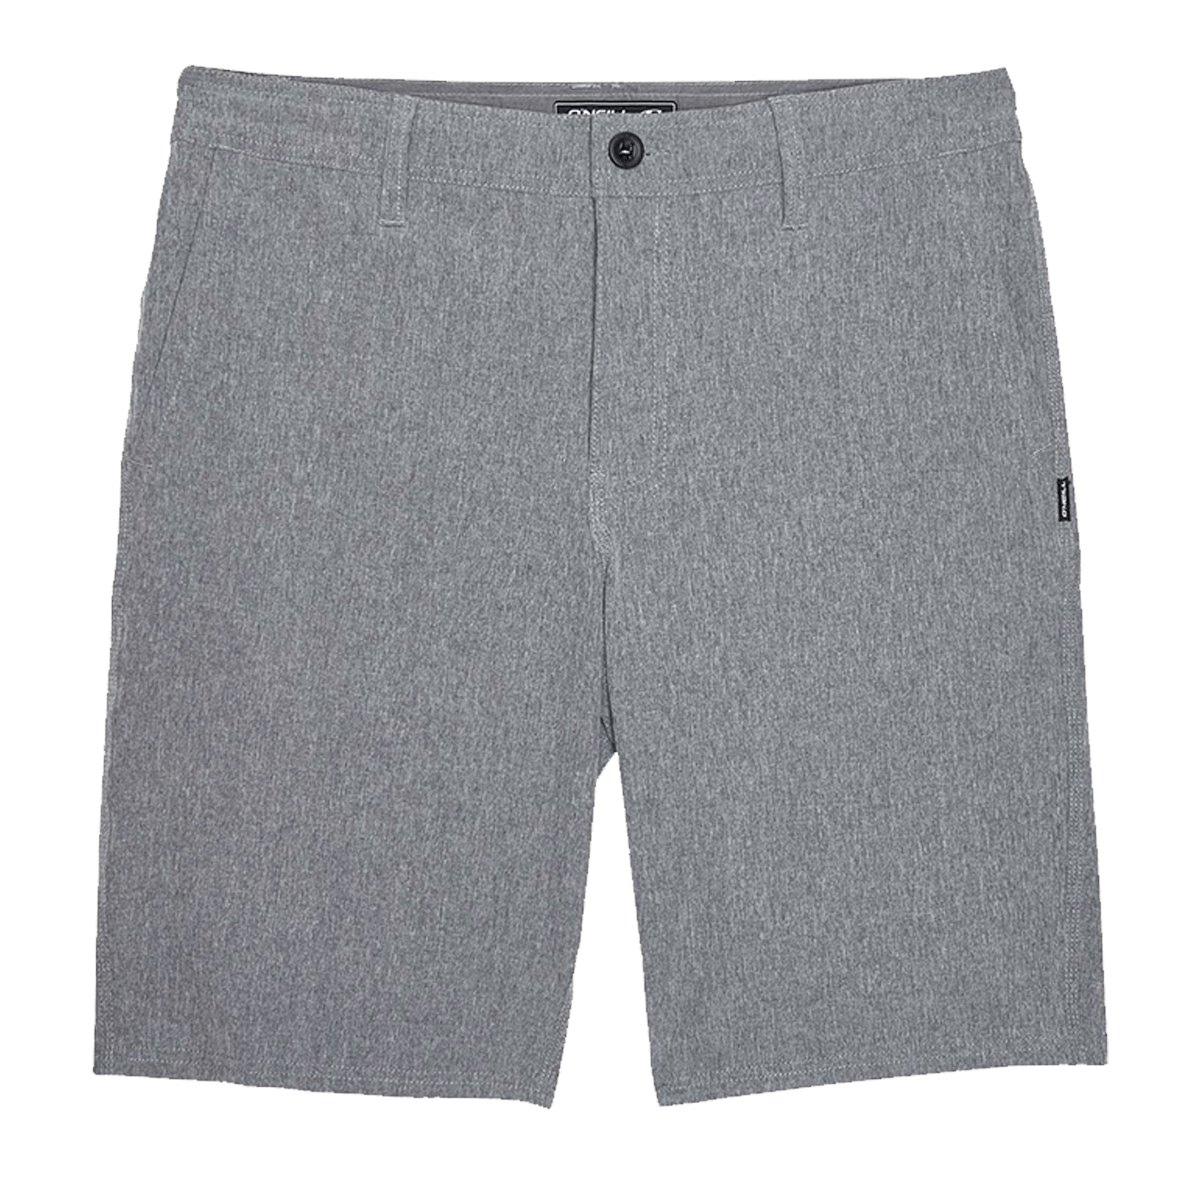 O'Neill Reserve Heather 21" Hybrid Shorts in Grey - BoardCo